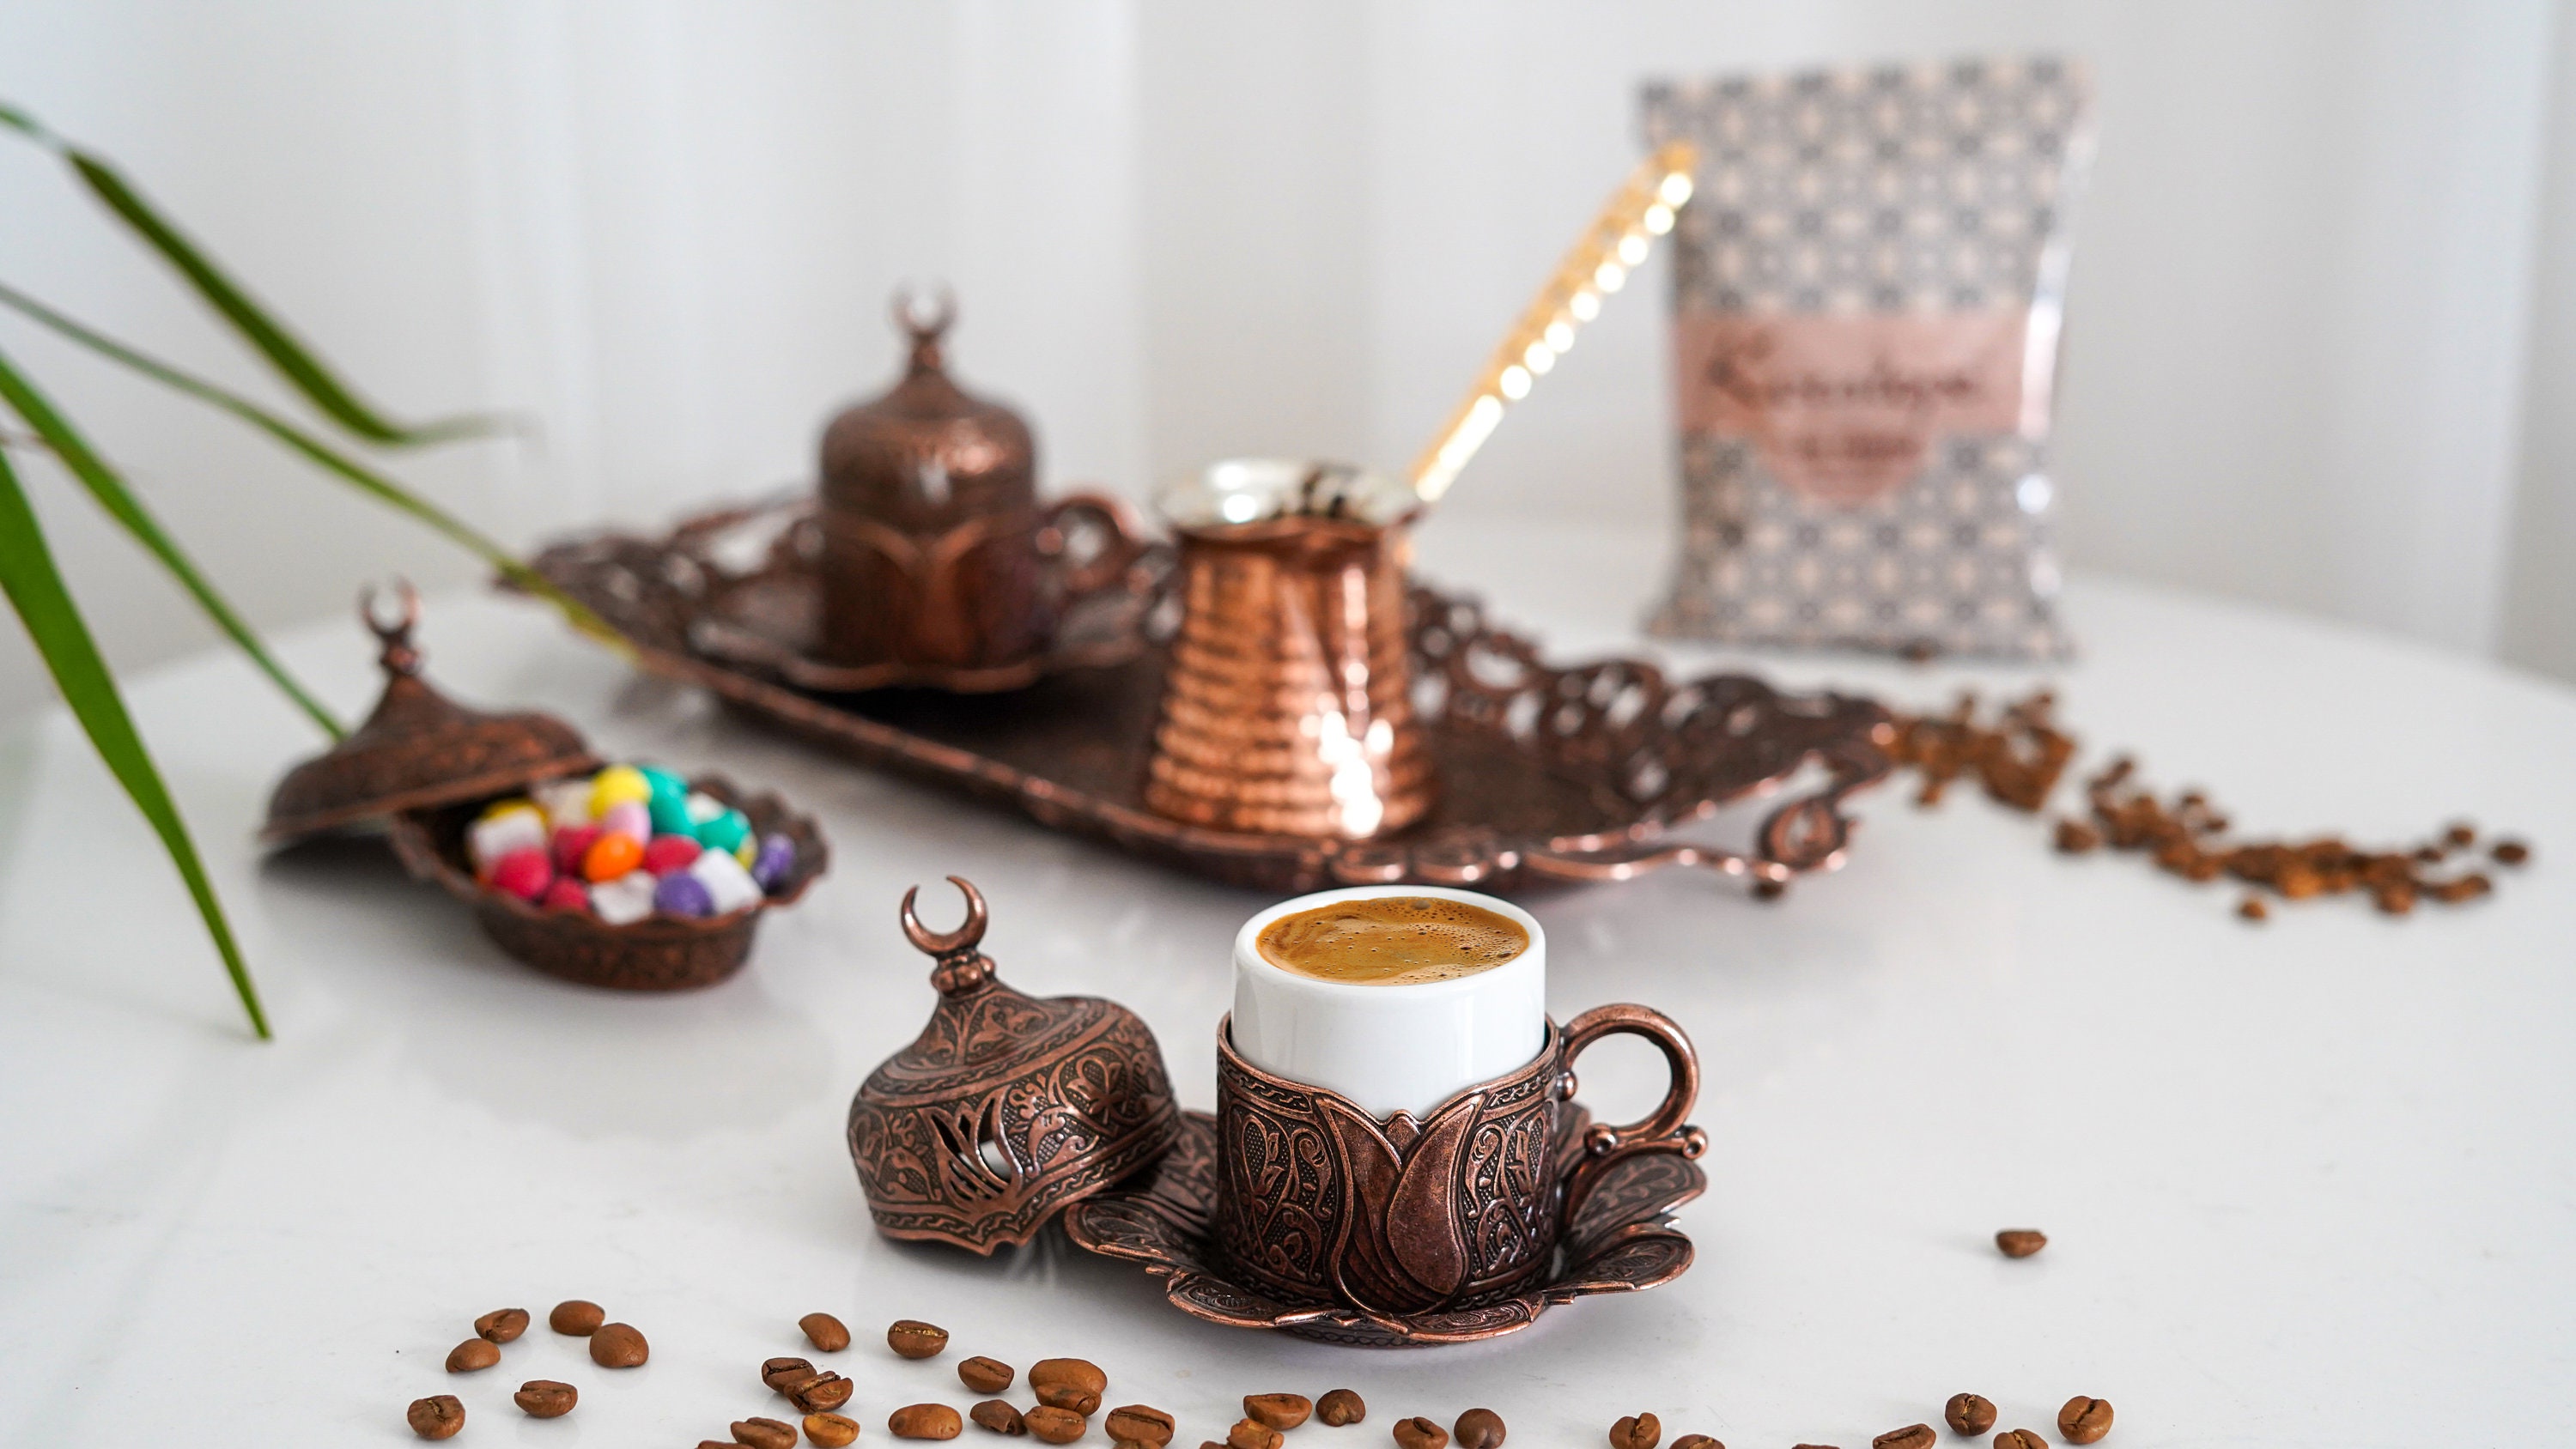  Turkish Copper Coffee Set for 2, Arabic Greek Coffee Serving  Set, Espresso Service Tray, Pure Copper Coffee Cups.. : Home & Kitchen